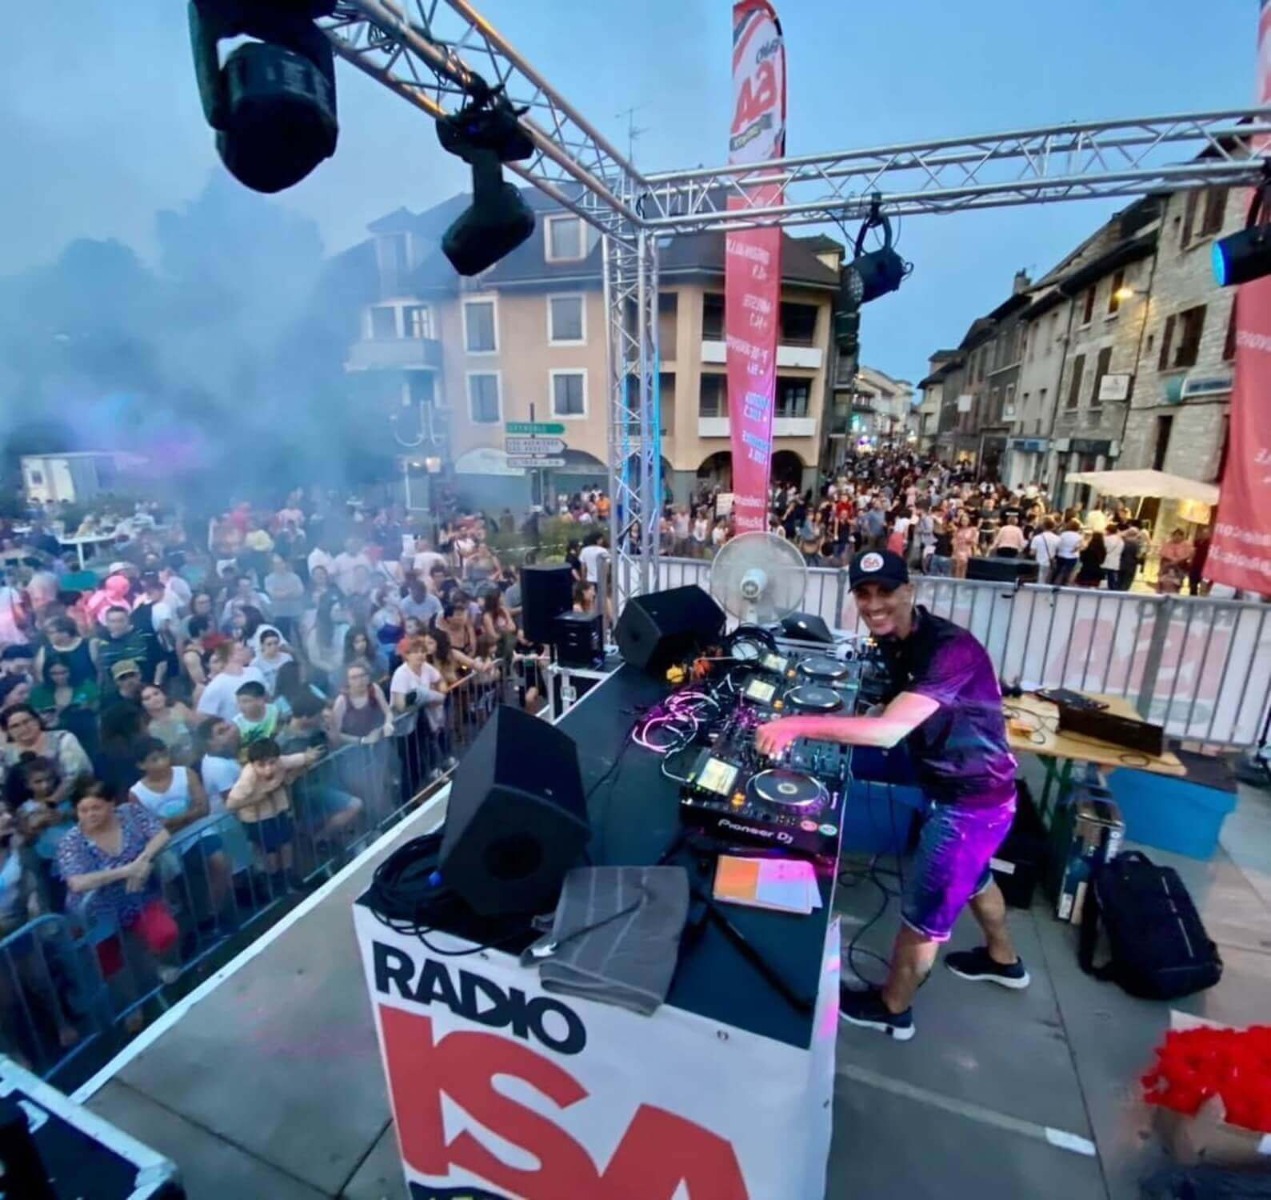 Le DJ de Radio ISA lors de la fête de la musique à Morestel en train de mixer